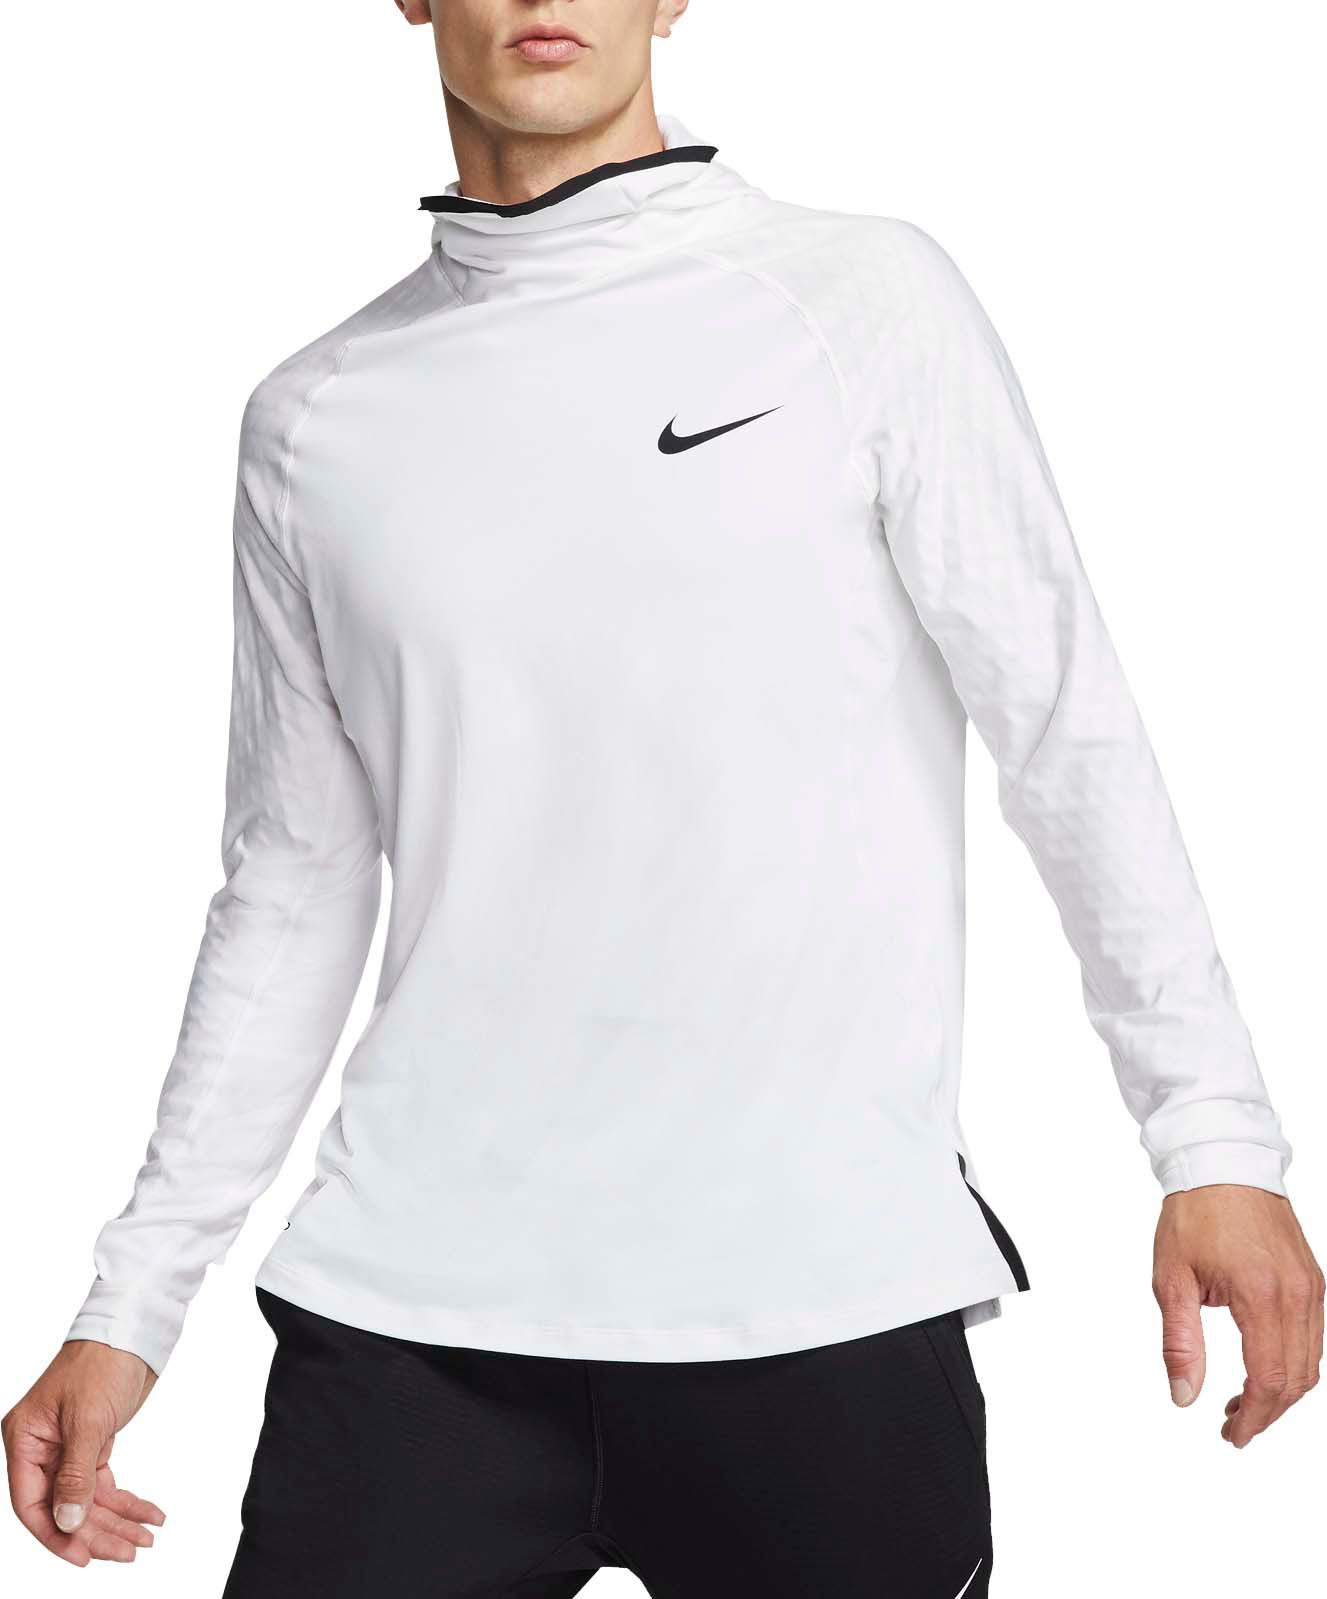 Nike Men's Pro Training Therma Long Sleeve Shirt - .97